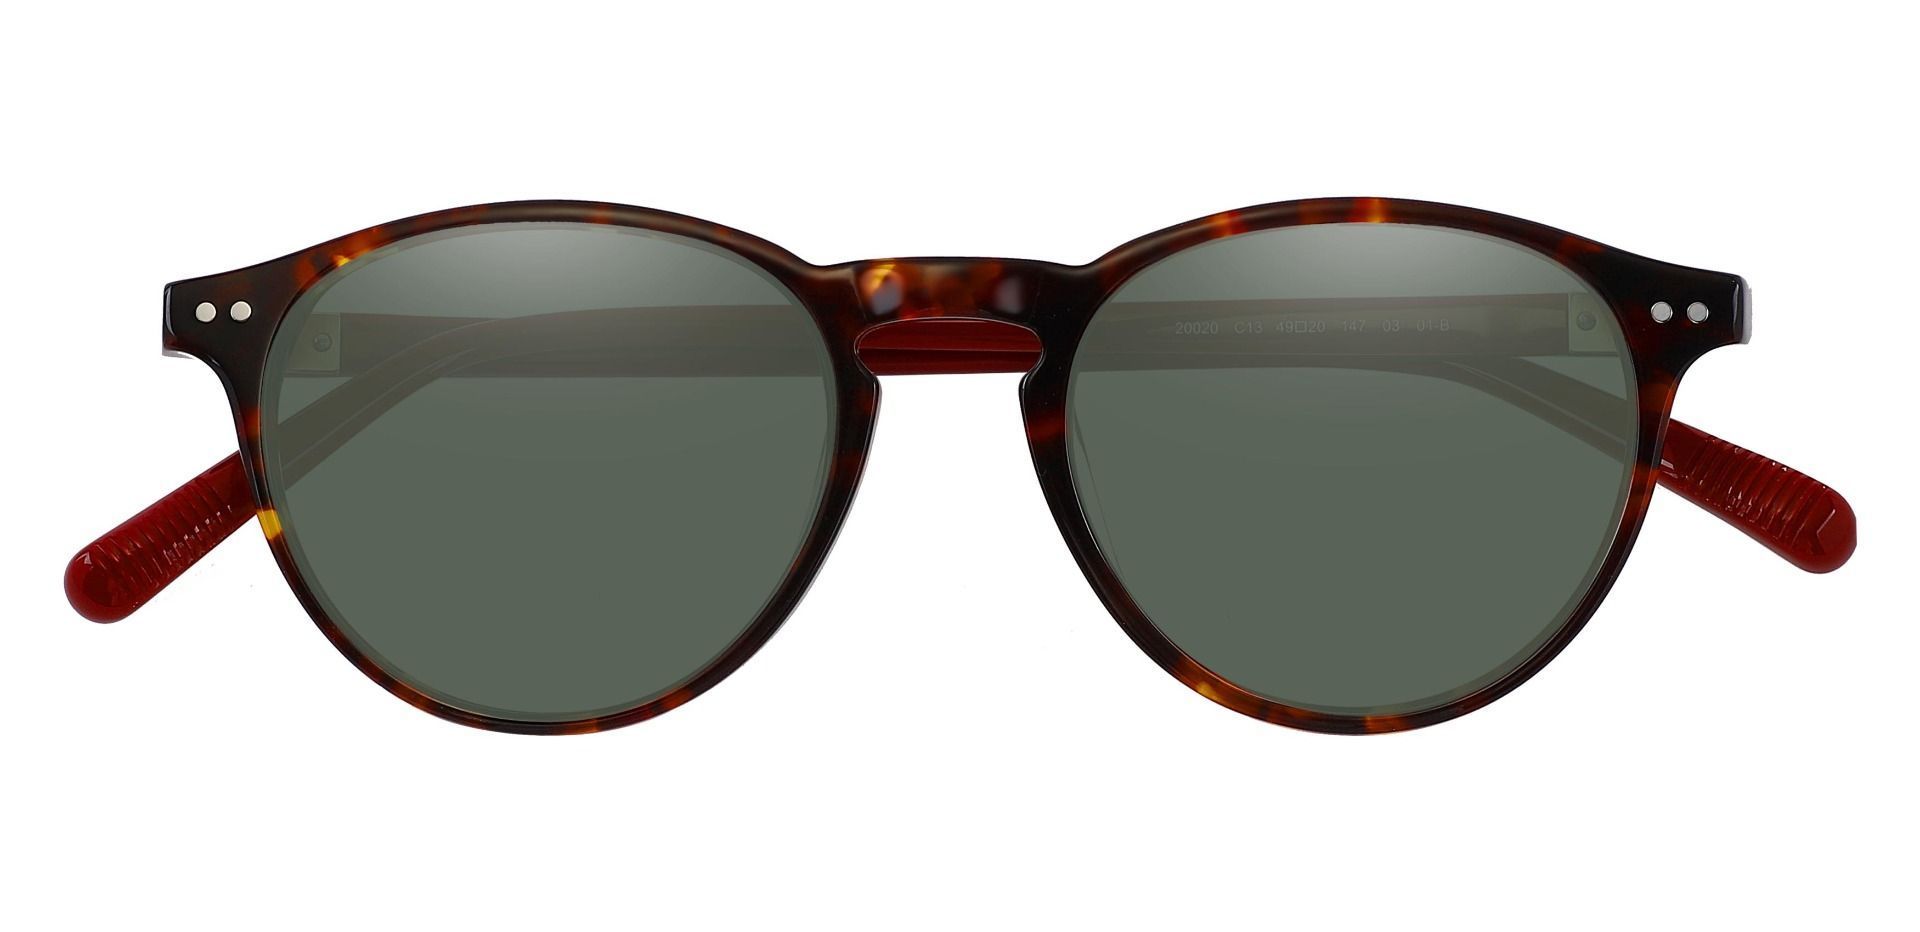 Monarch Oval Progressive Sunglasses - Tortoise Frame With Green Lenses